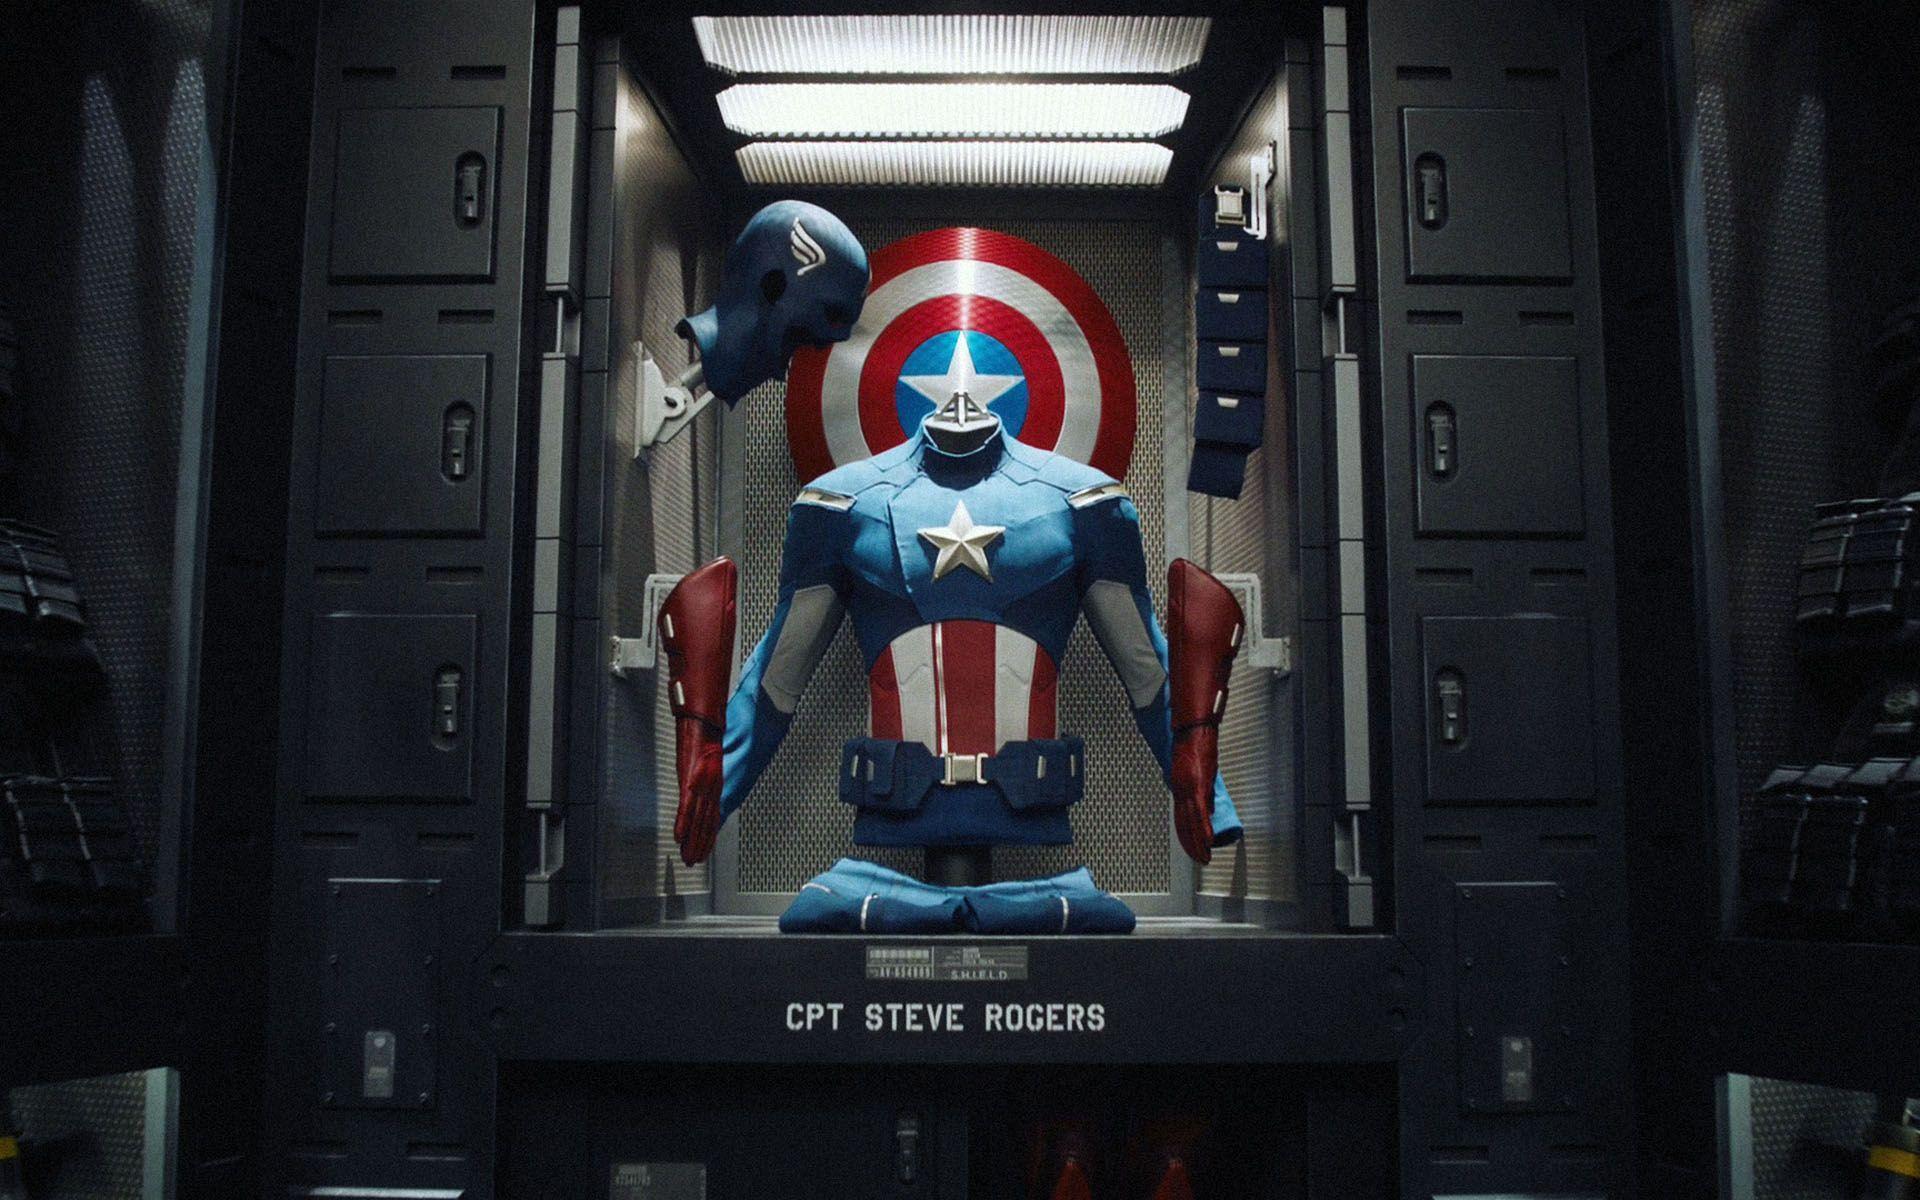 Avengers desktop wallpapers in high resolution